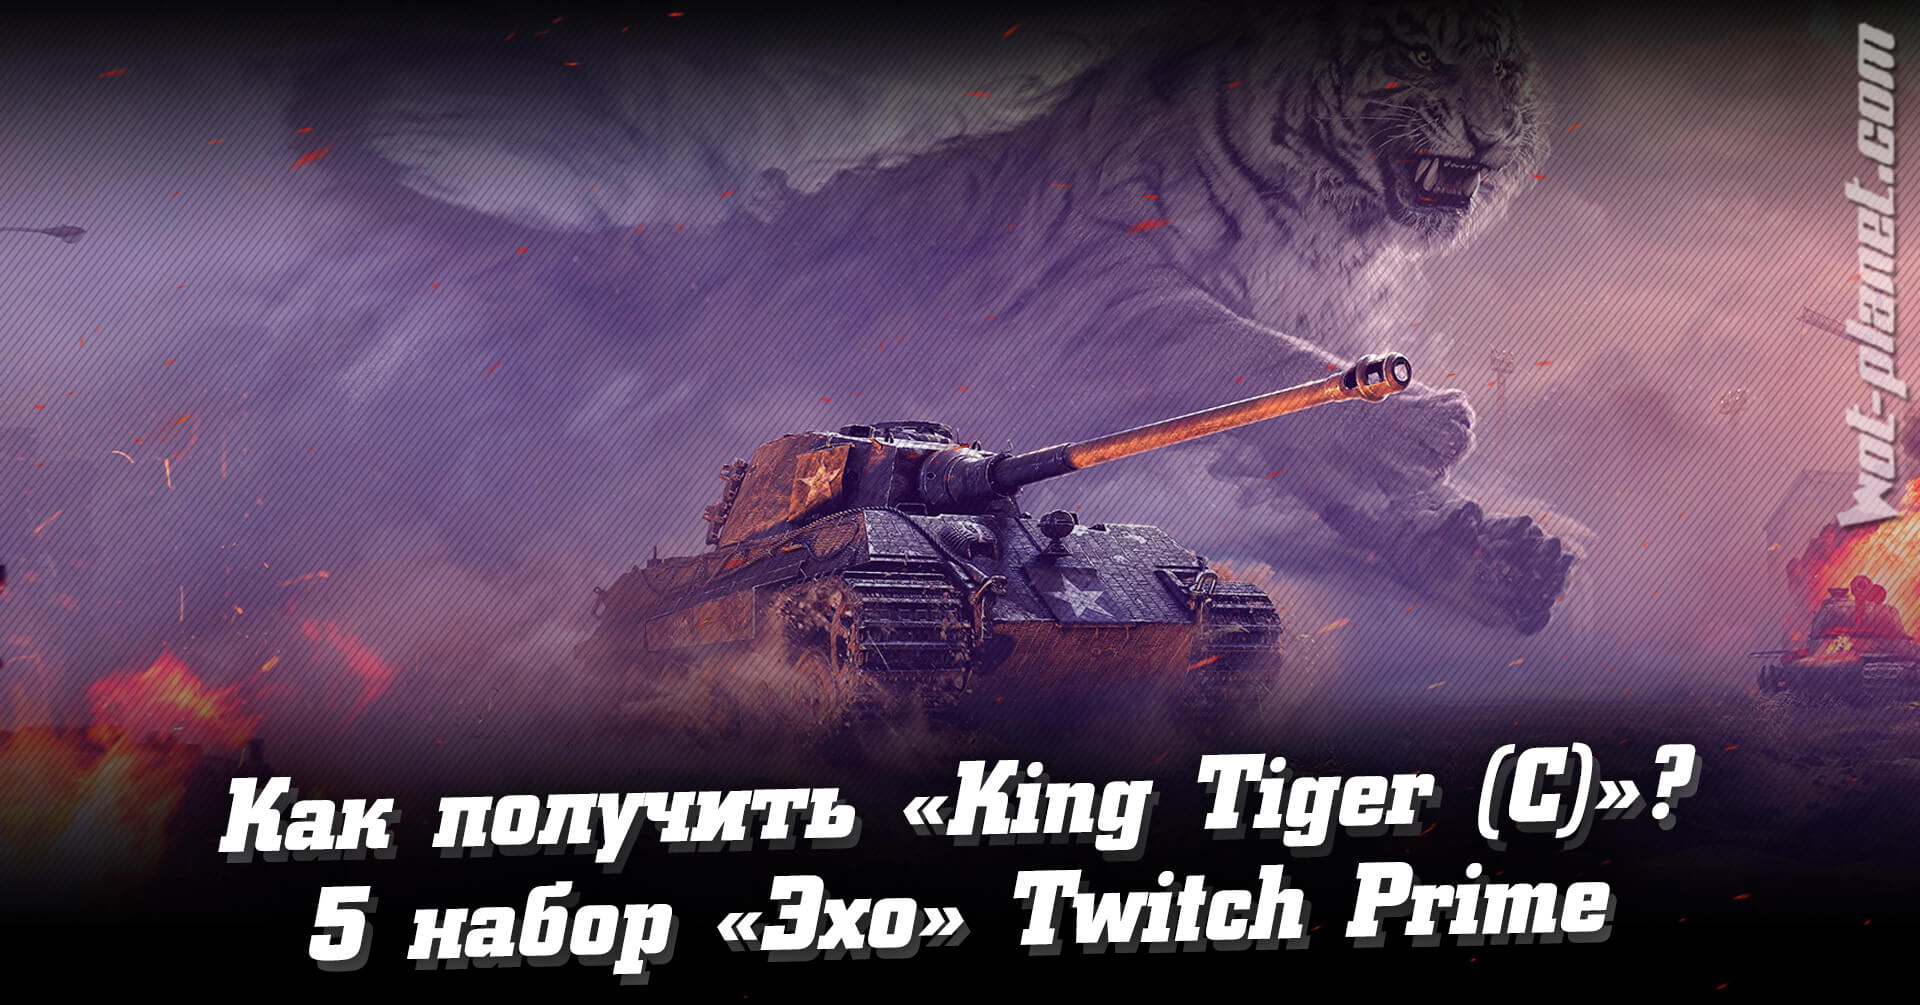 King Tiger C (захваченный) за 100 руб. Twitch Prime